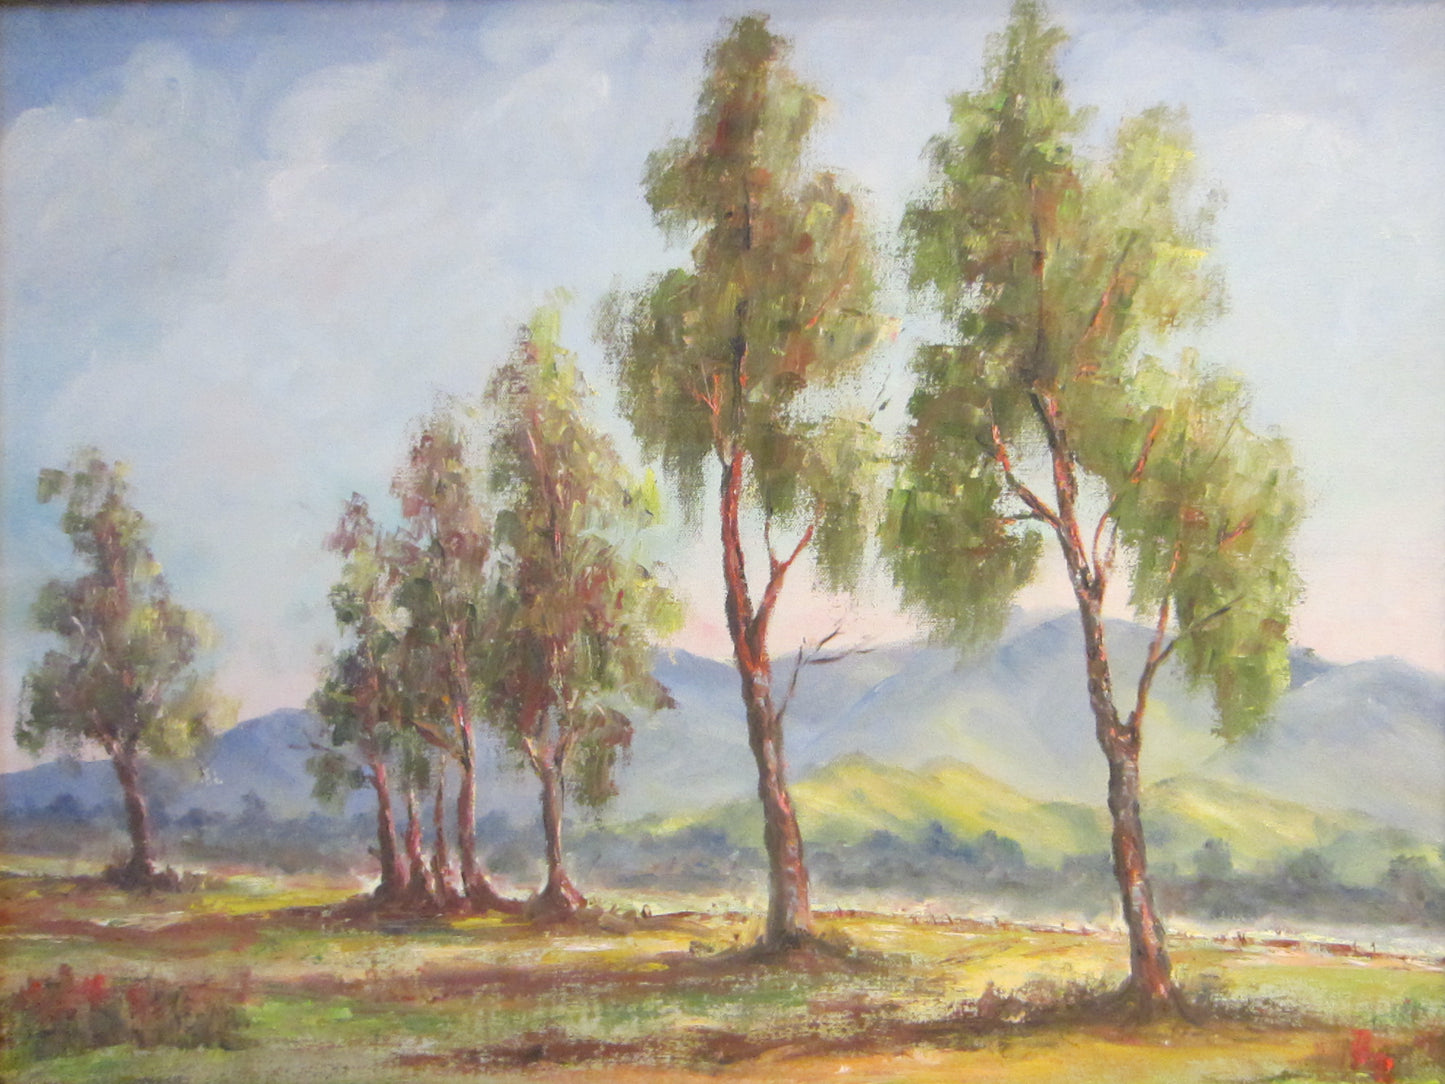 California Plein Air Impressionist Landscape Signed Oil On Canvas